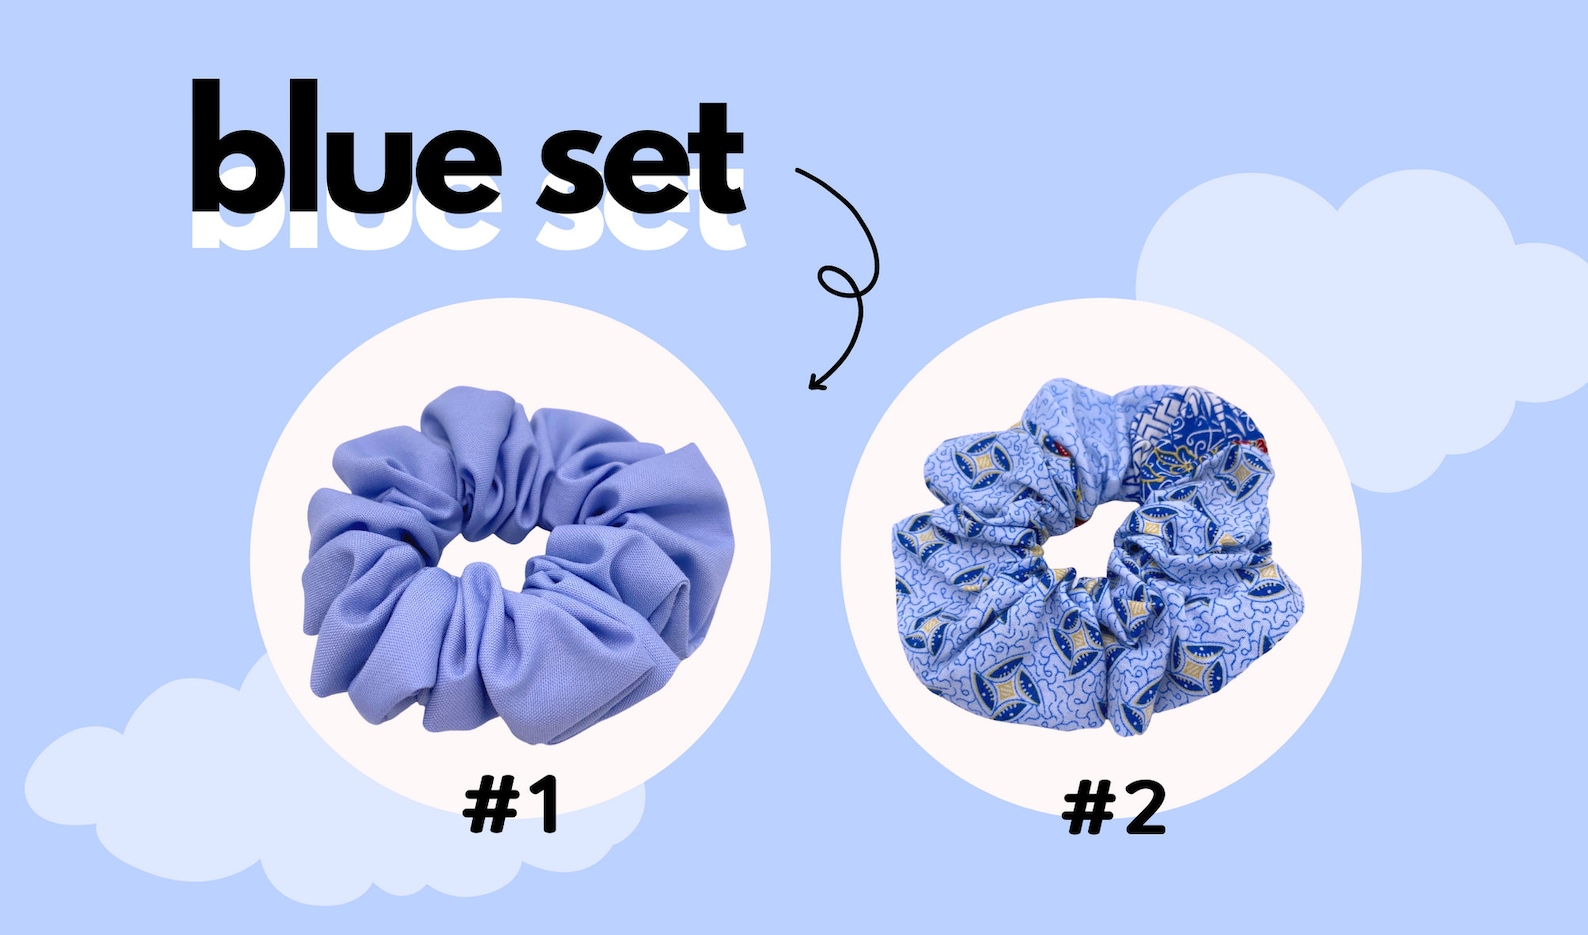 5. Royal Blue Polka Dot Hair Scrunchie - wide 8